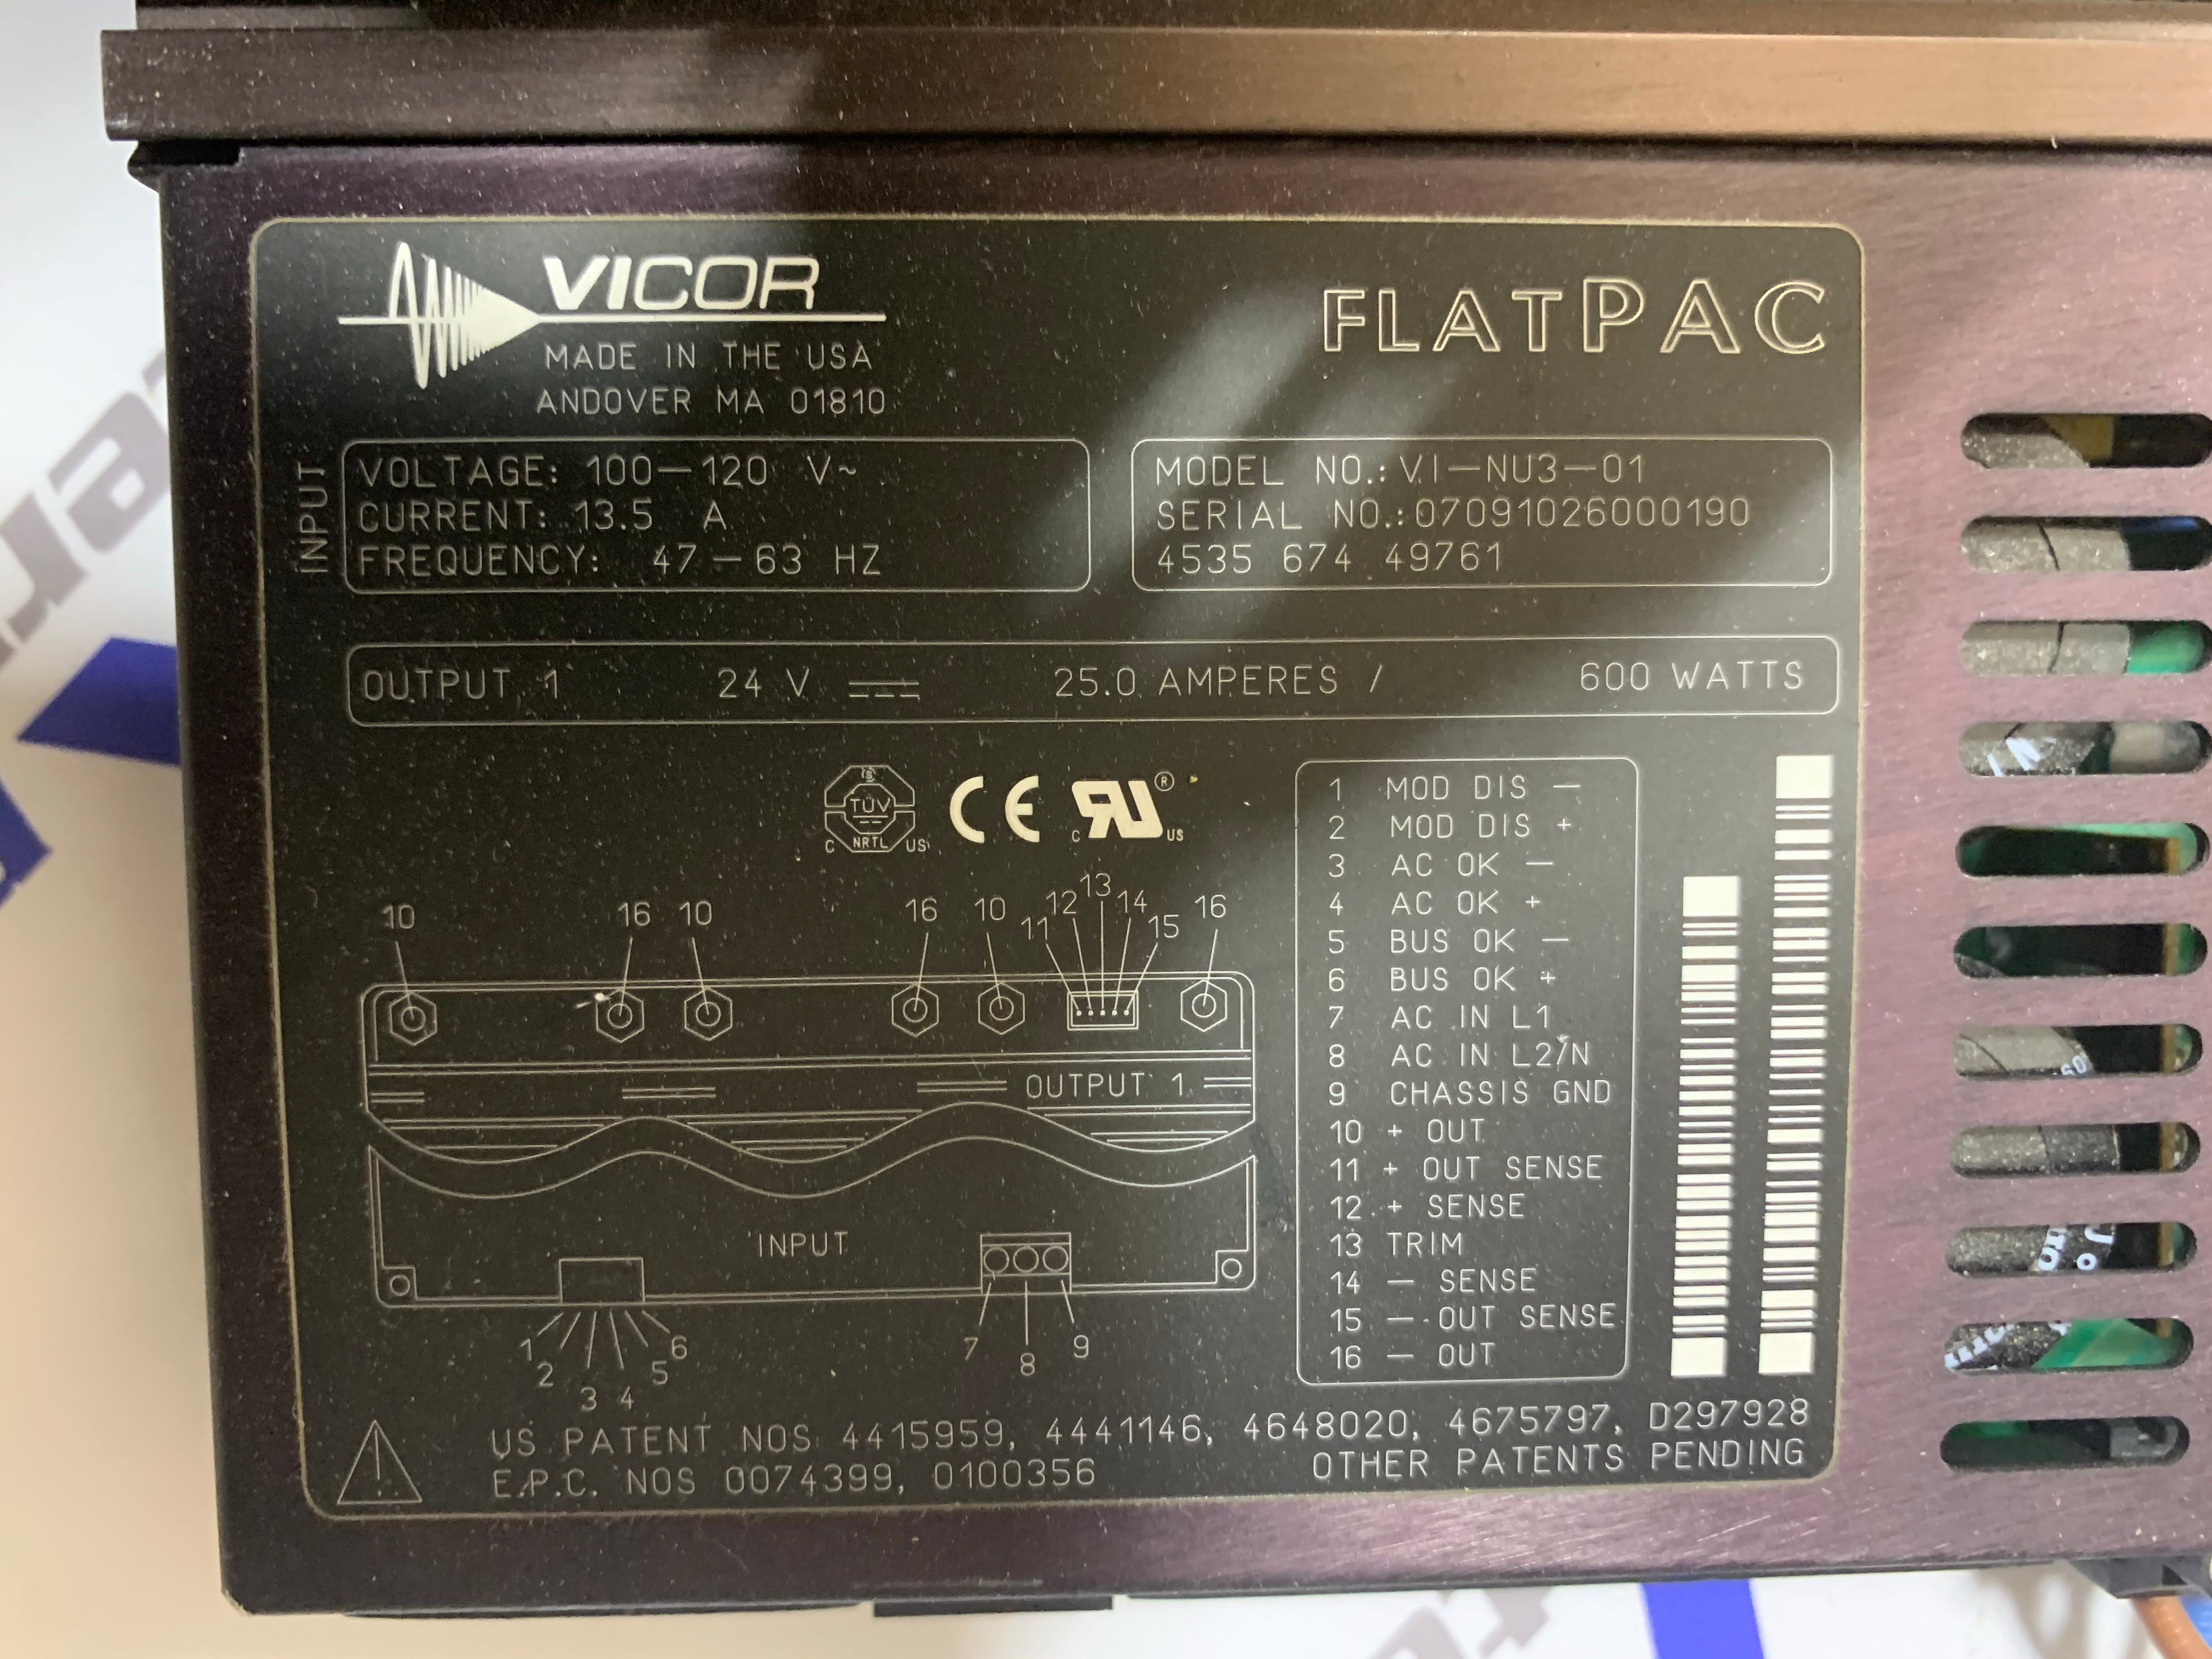 453567449761 v1-NU3-01 vicor FLATPAC